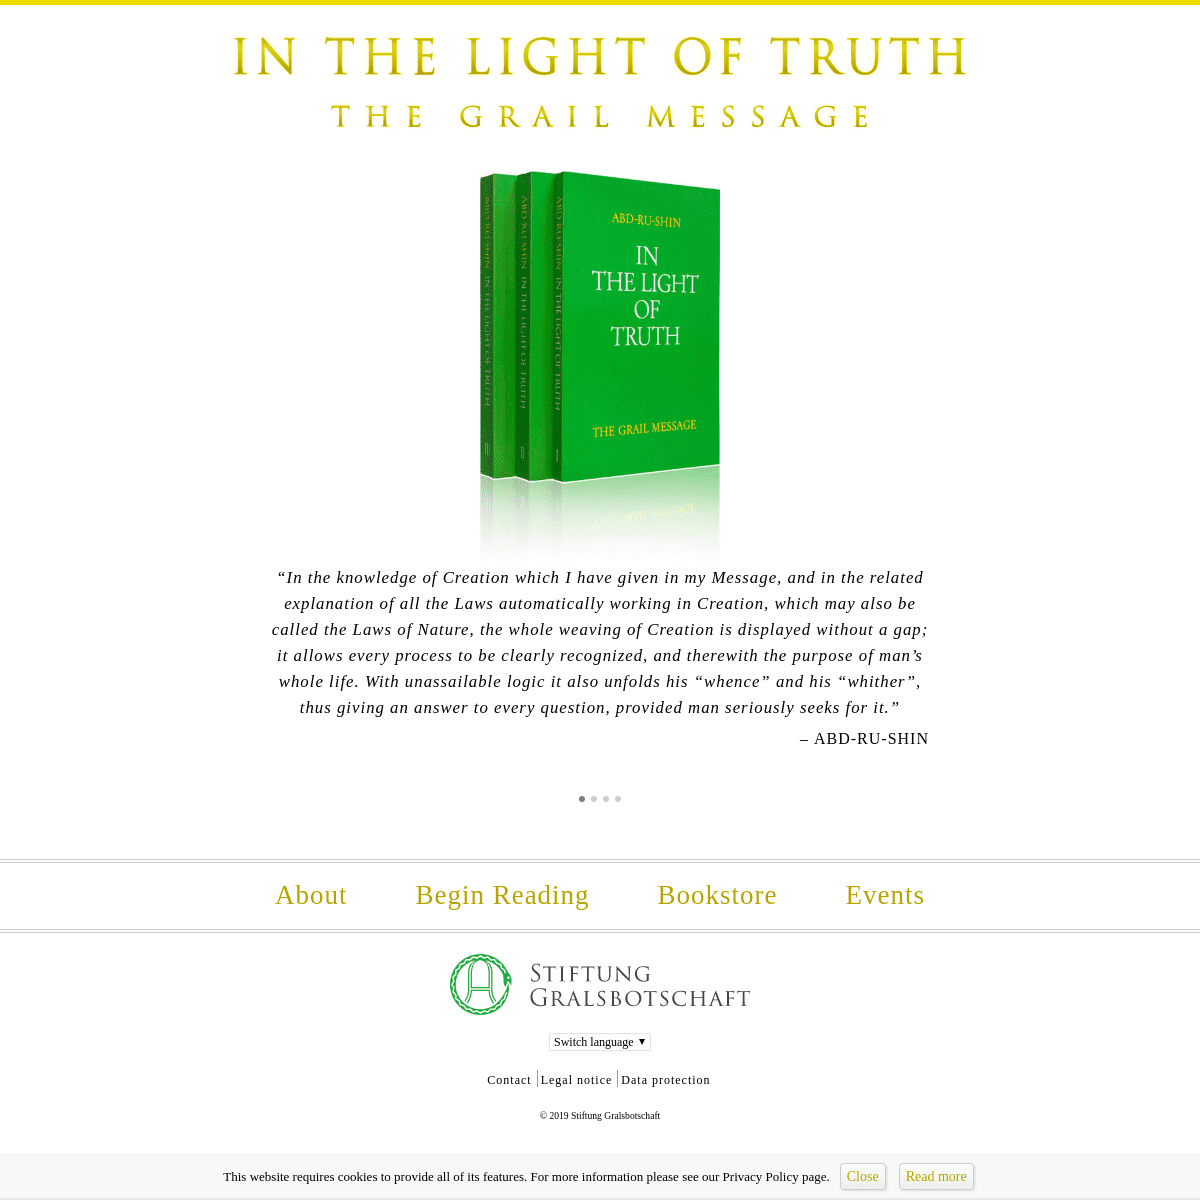 In the Light of Truth – The Grail Message by Abd-ru-shin - grailmessage.com